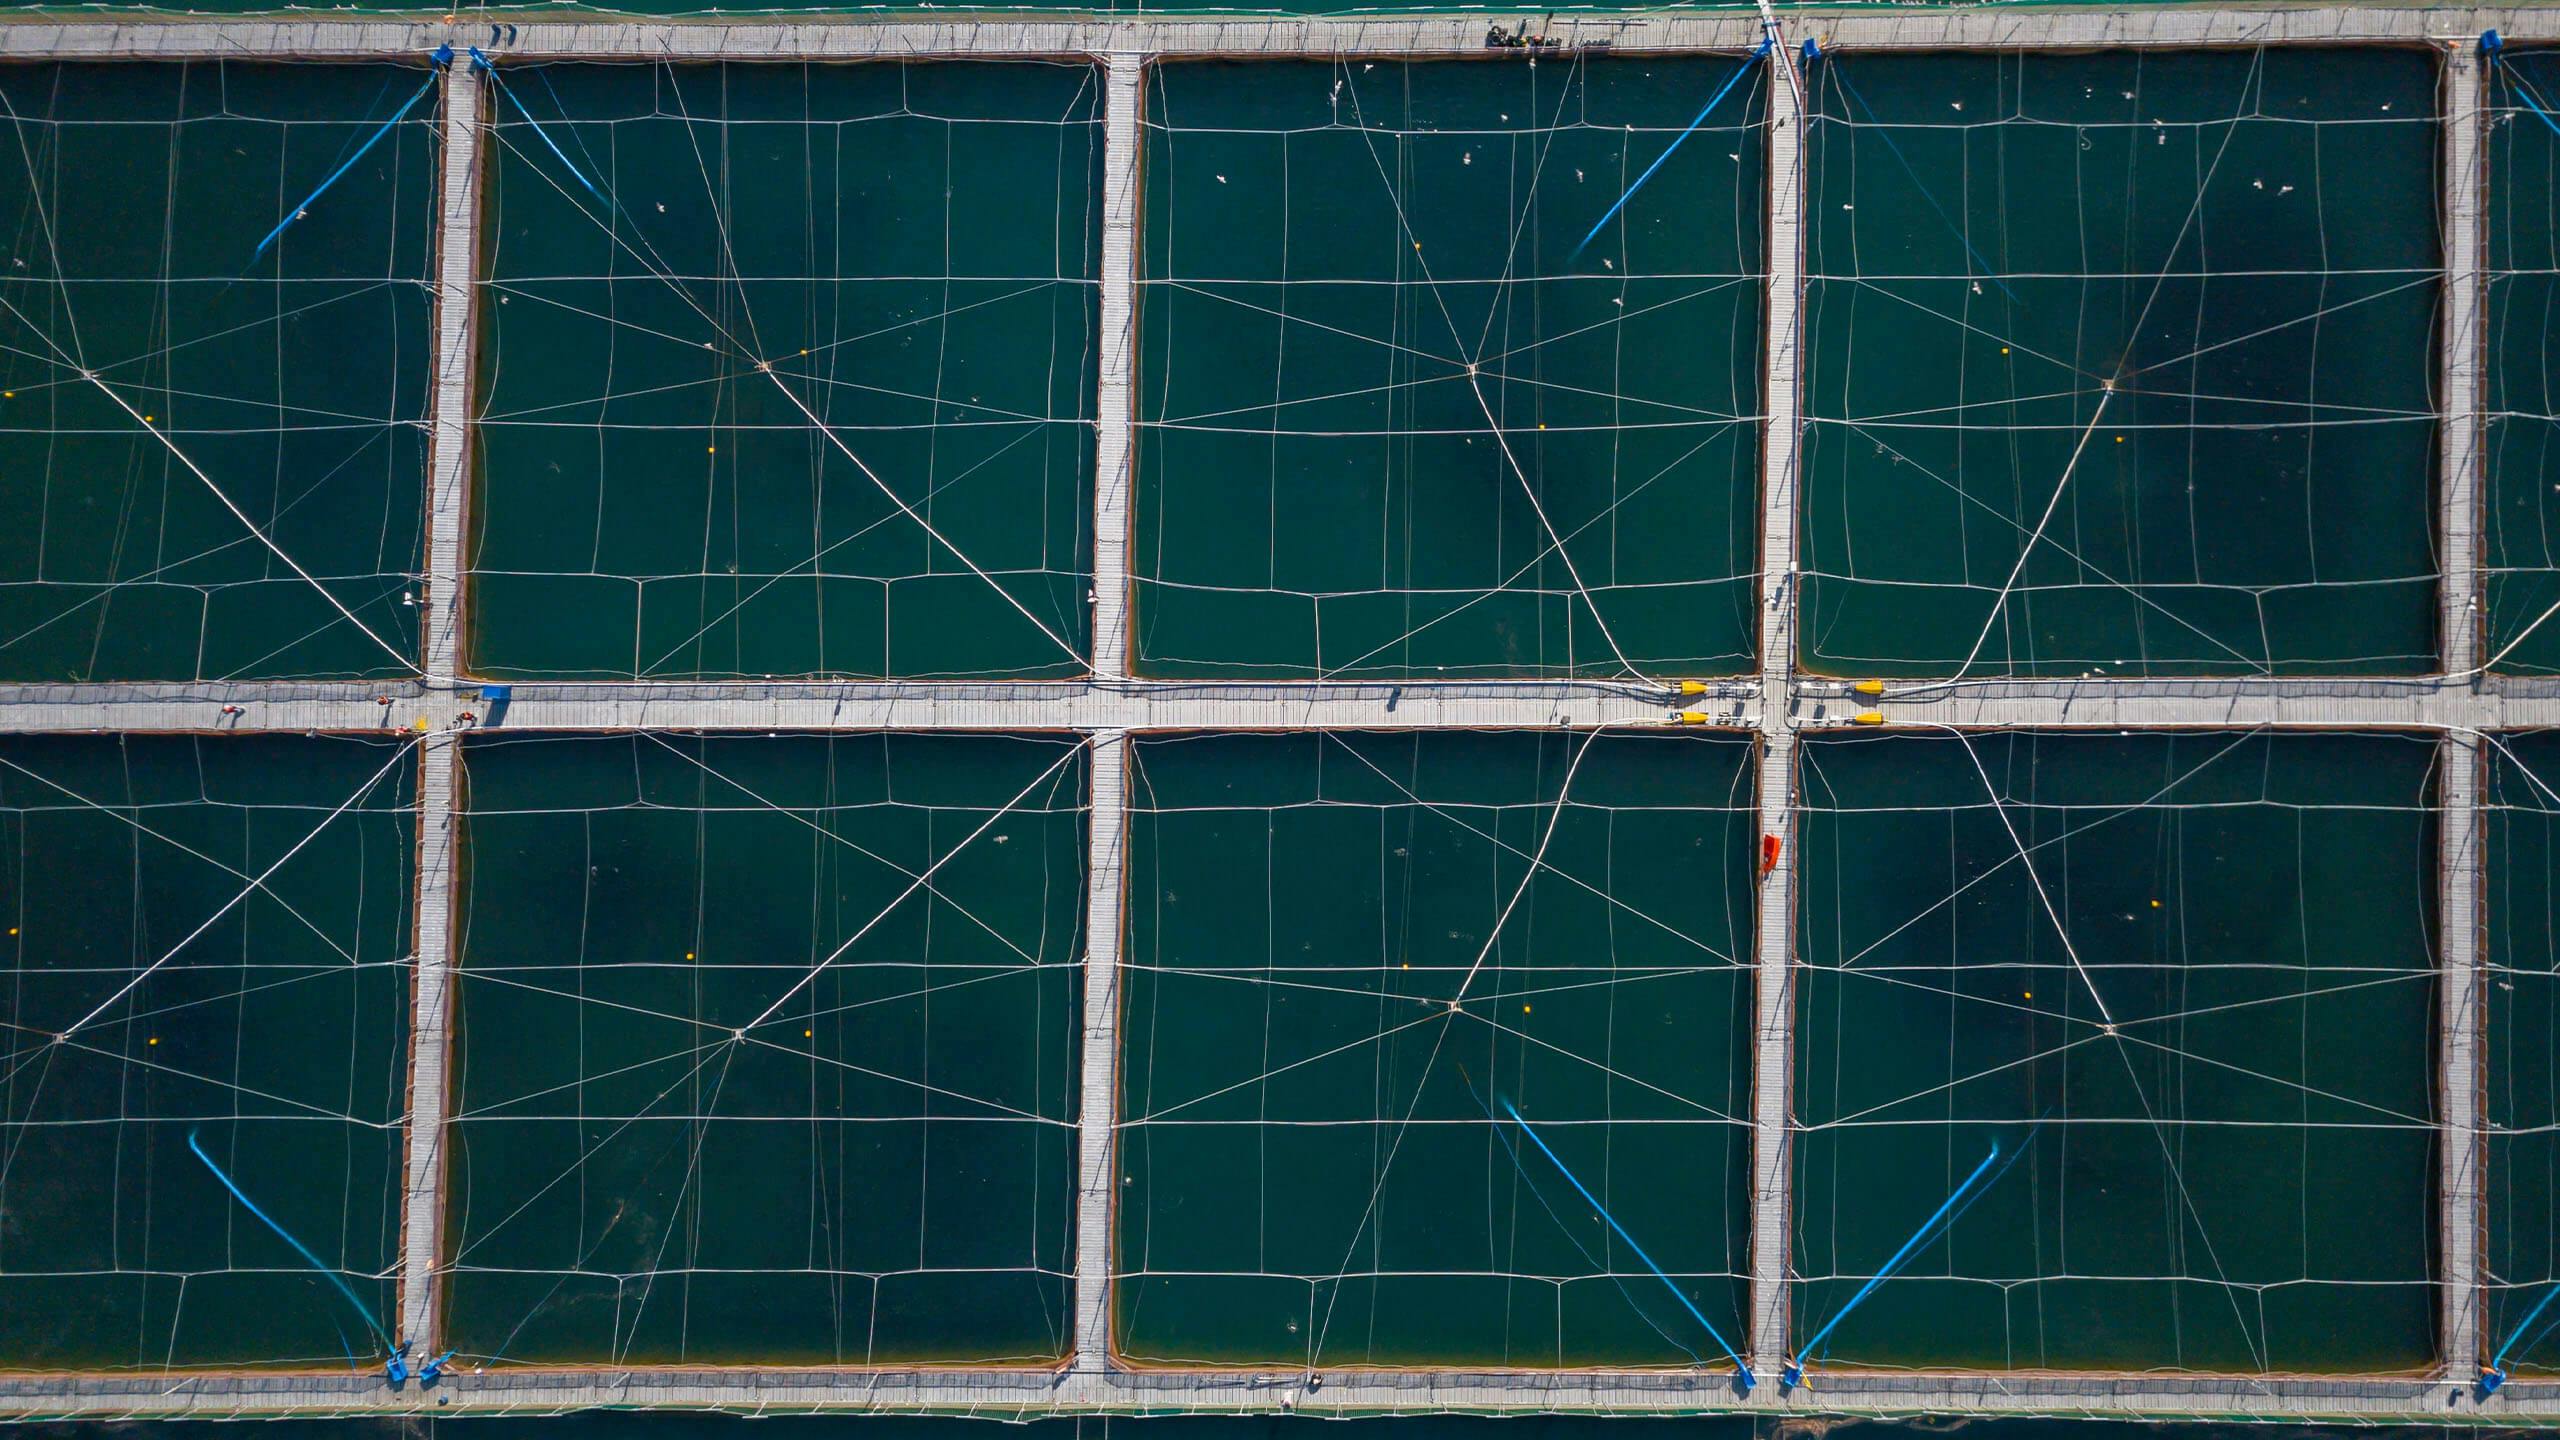 Aerial view of fish pens on aquaculture farm 